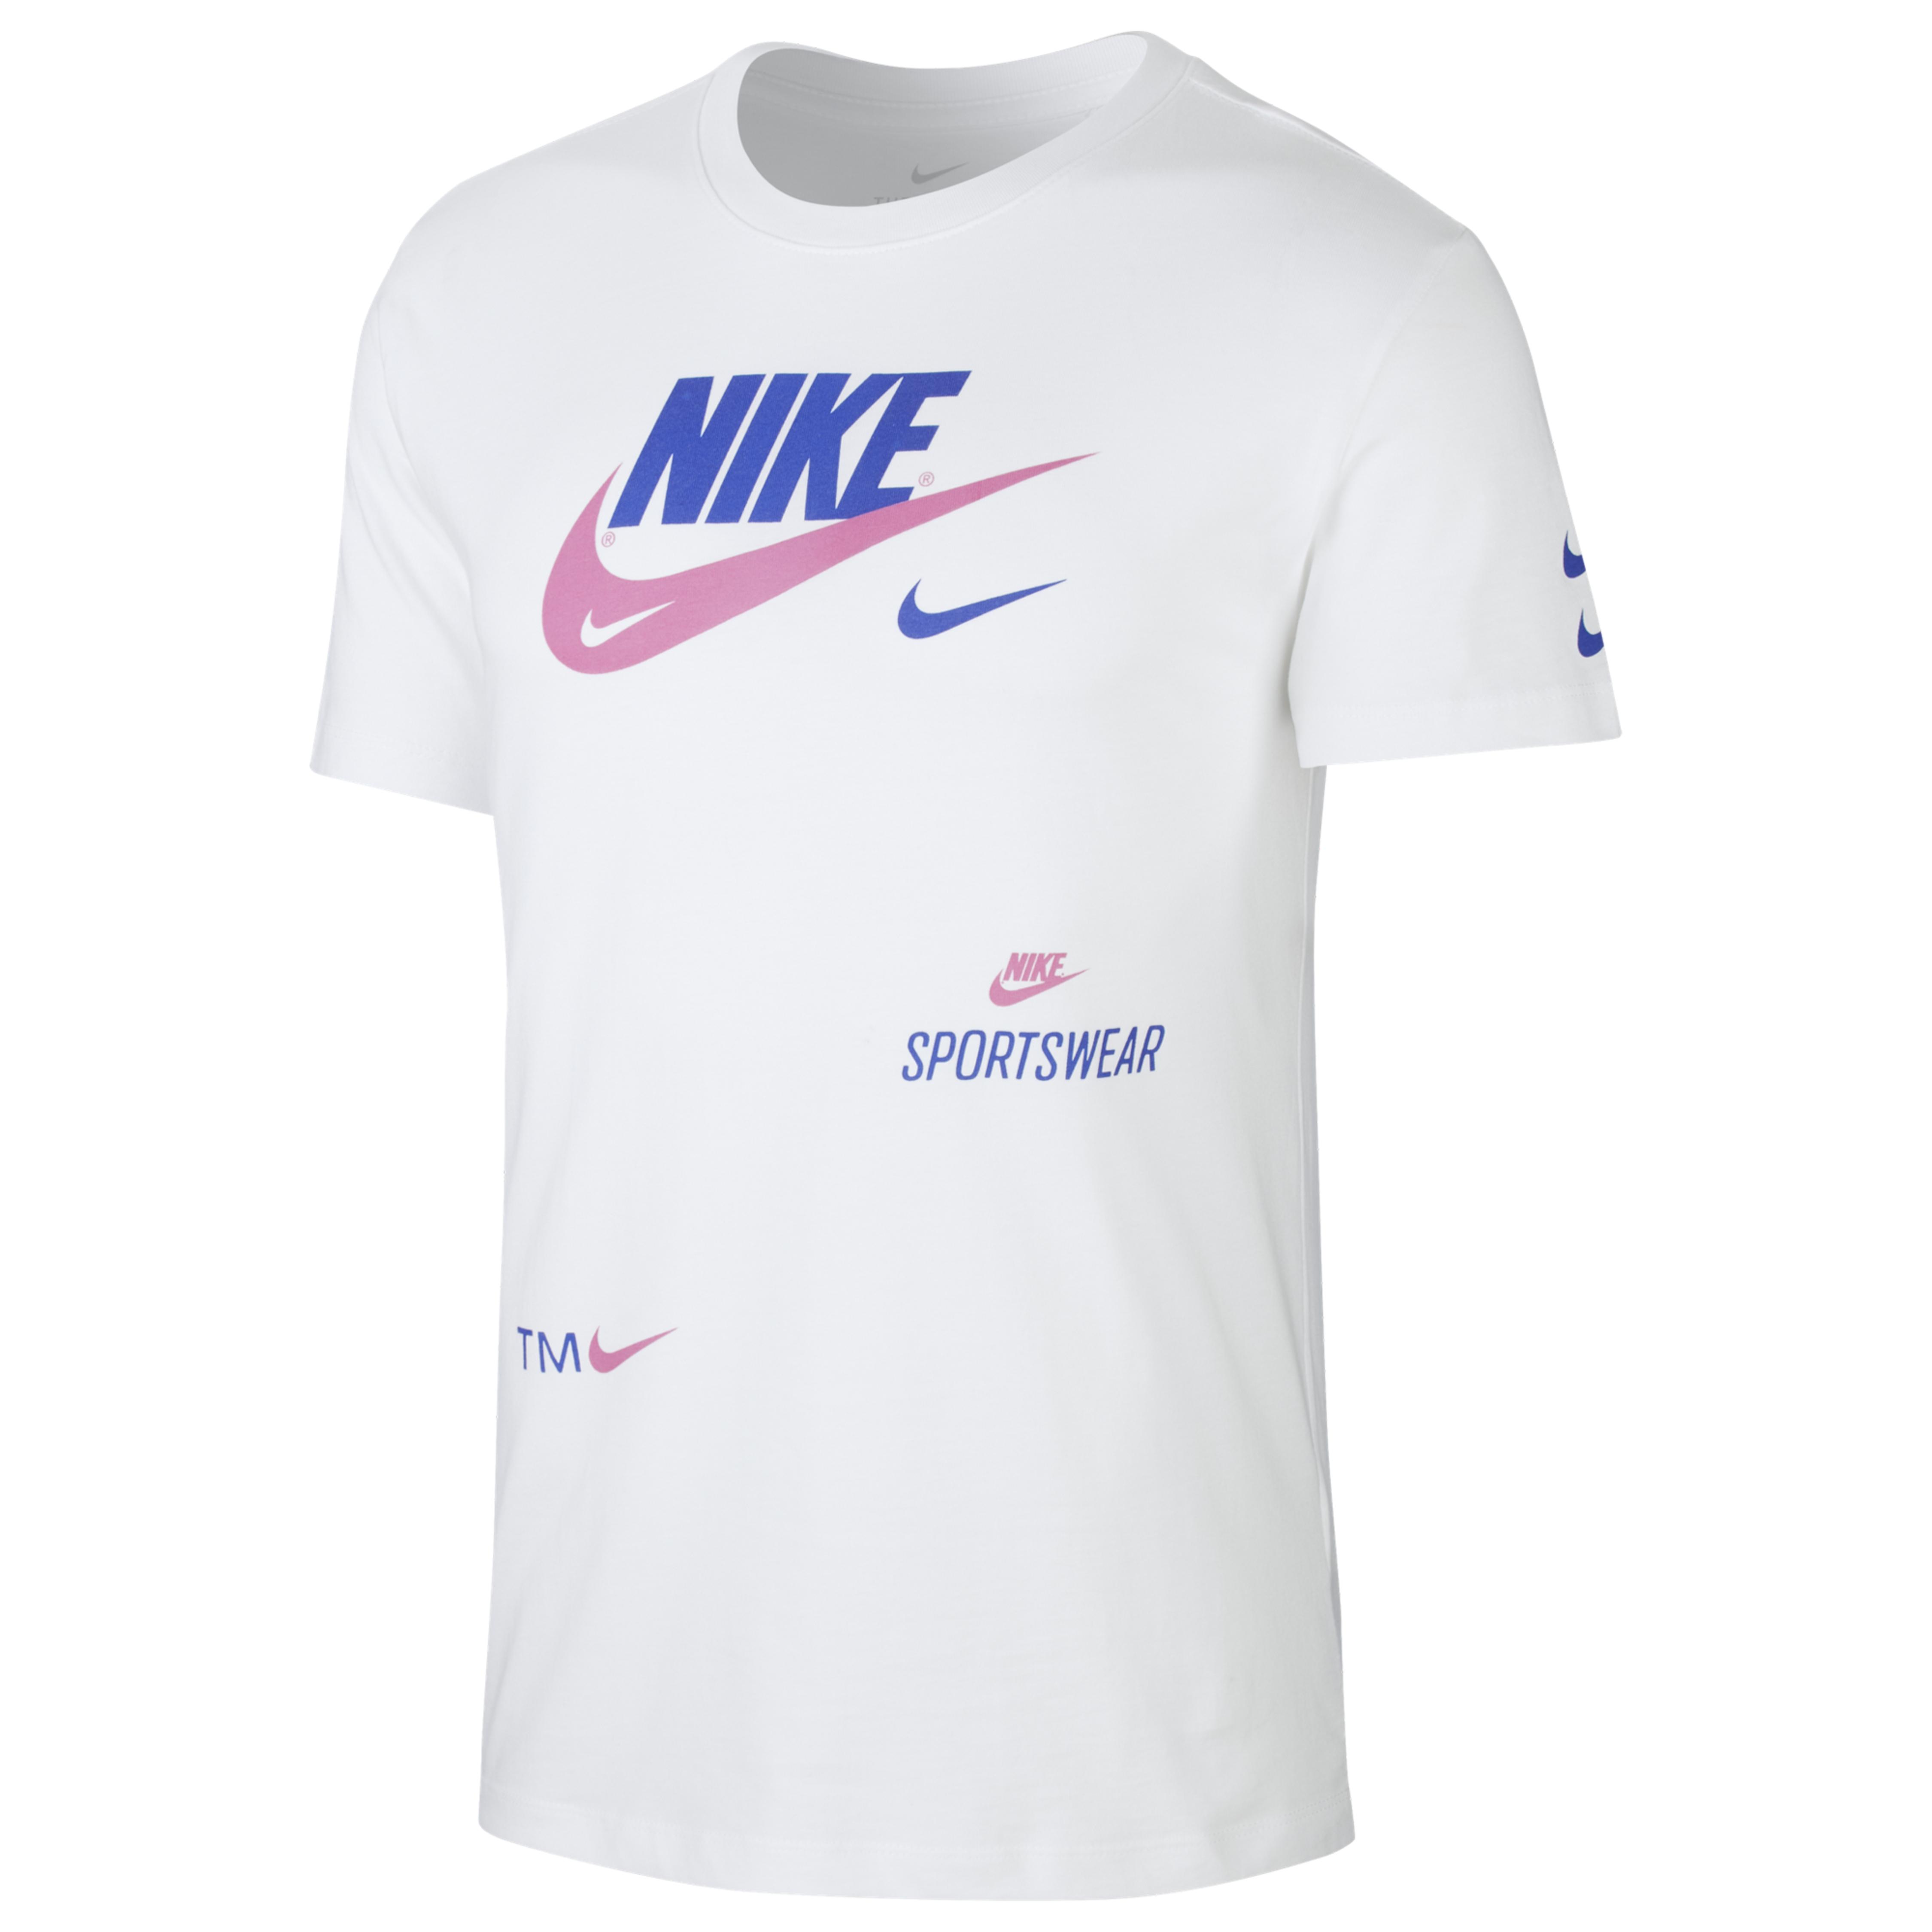 Nike Cotton Swoosh Multi T-shirt in White/Pink (White) for Men - Save ...